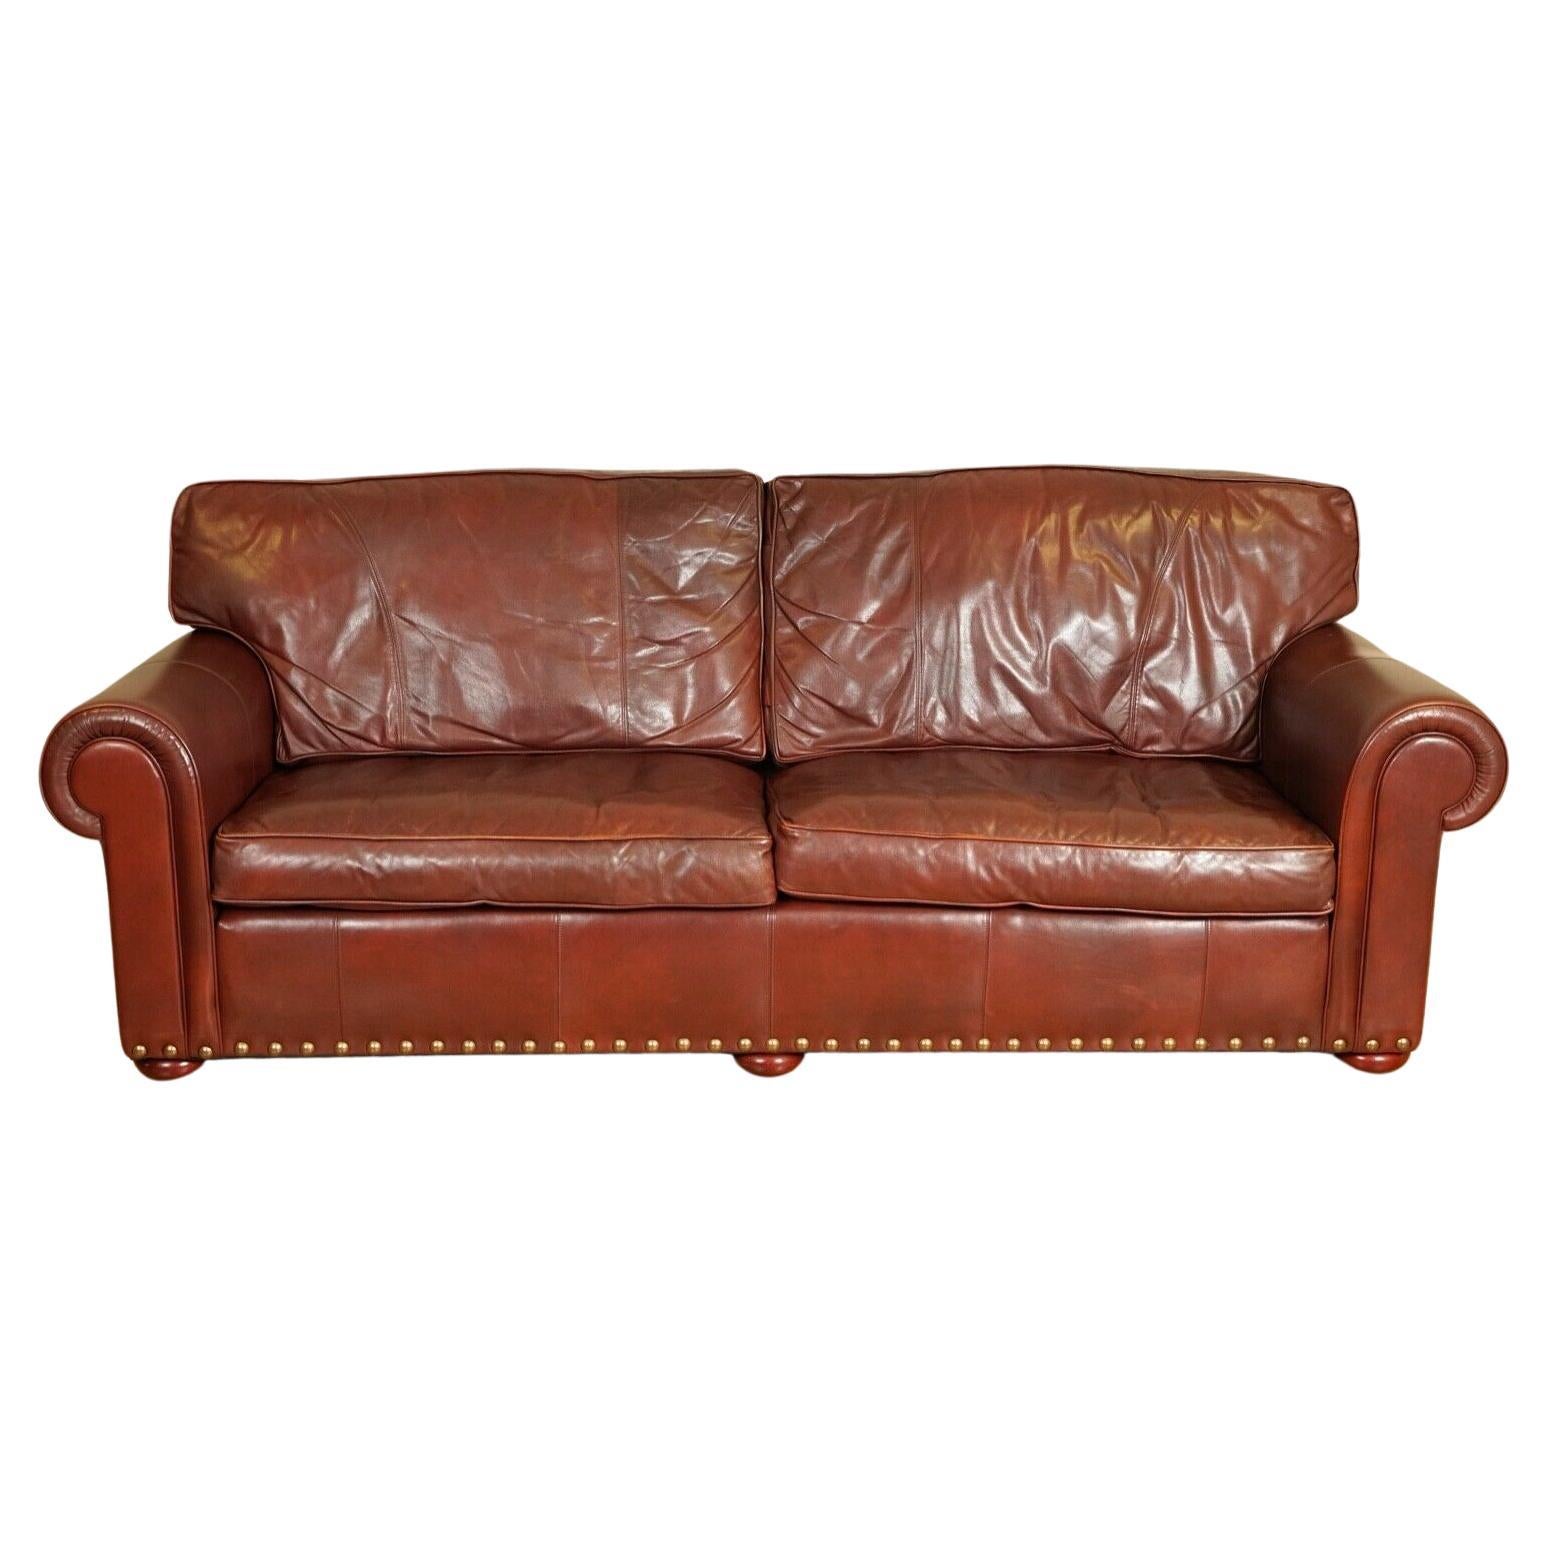 Stunning Wade Upholstery Reddish Brown Berrington Grand Sofa, 2 Seat Available